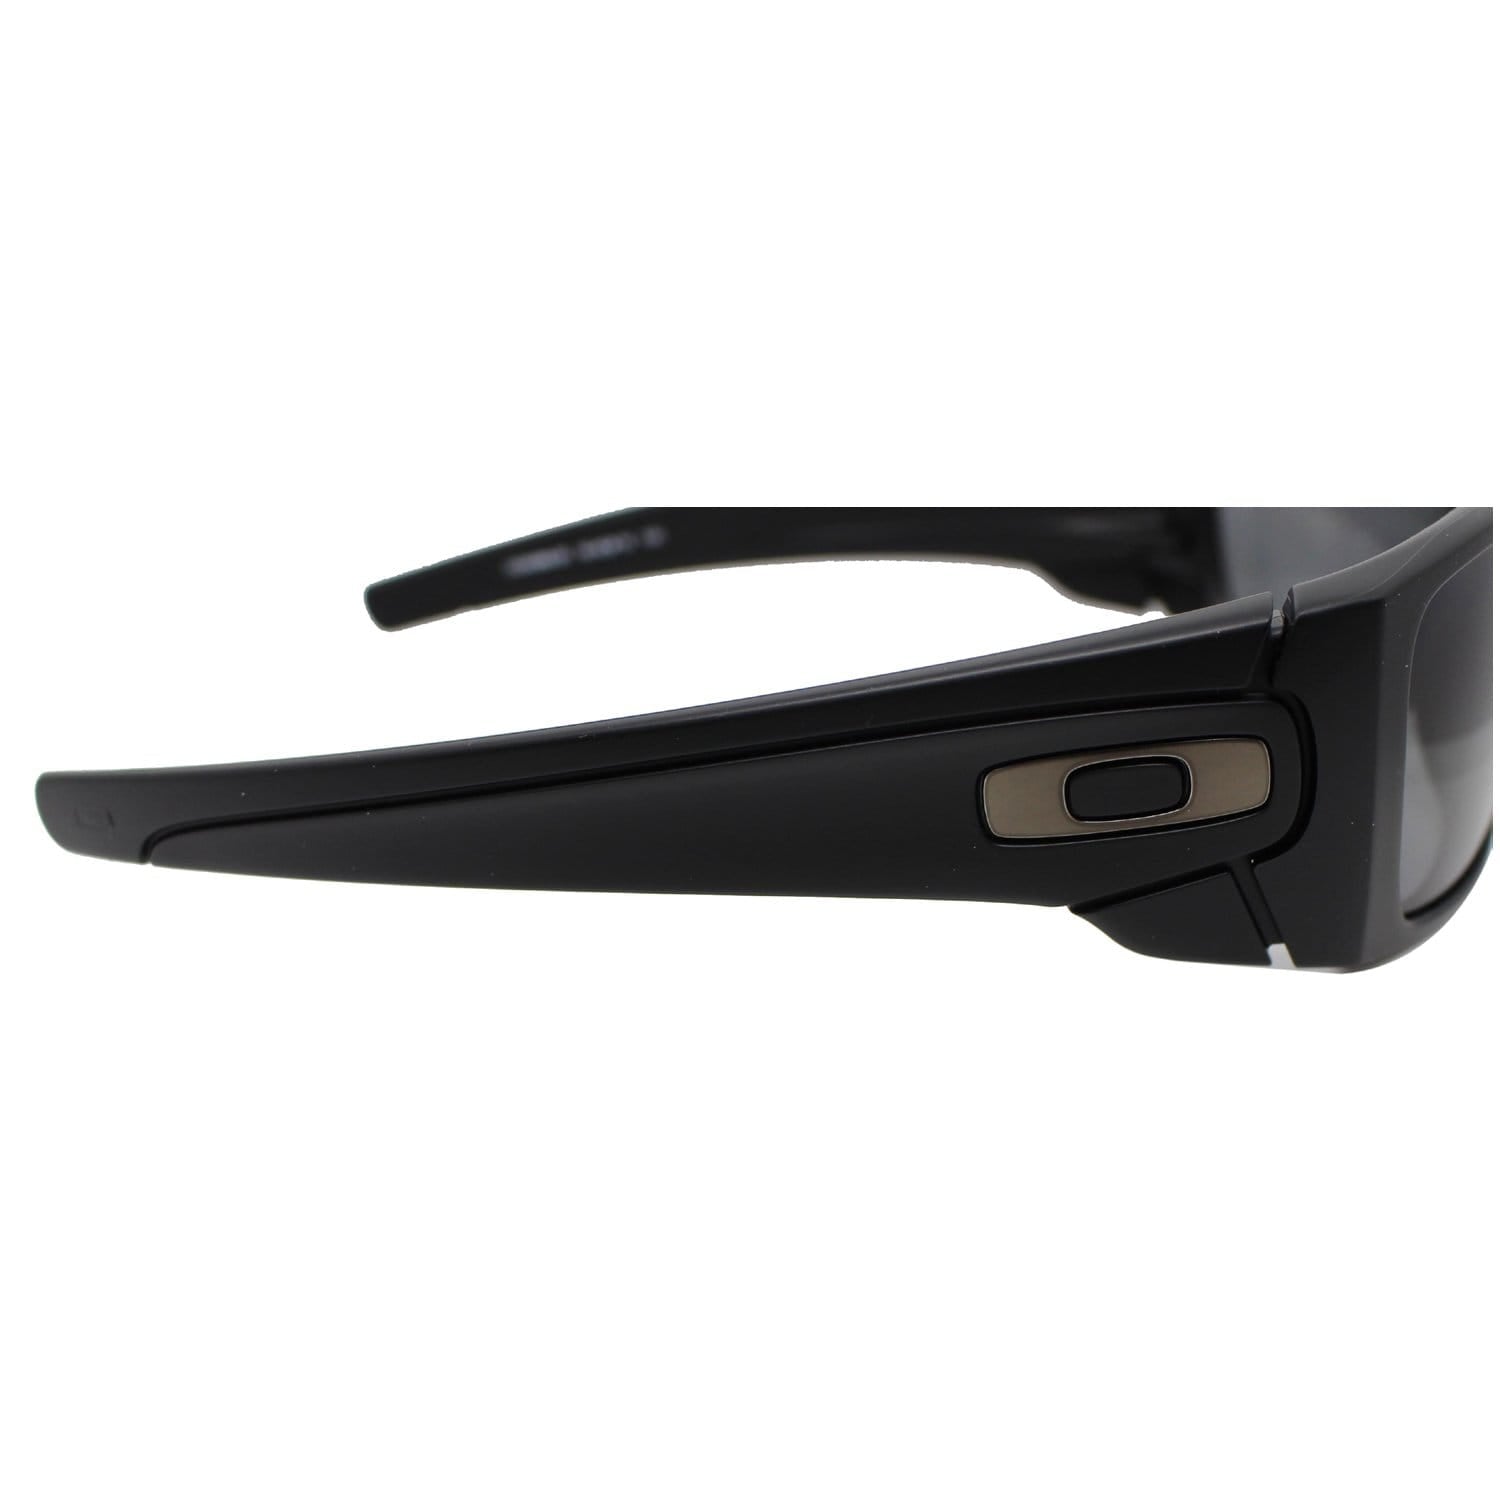 Oakley OO9096-05 Sunglasses Fuel Cell Matte Black Frame/Grey Polarized